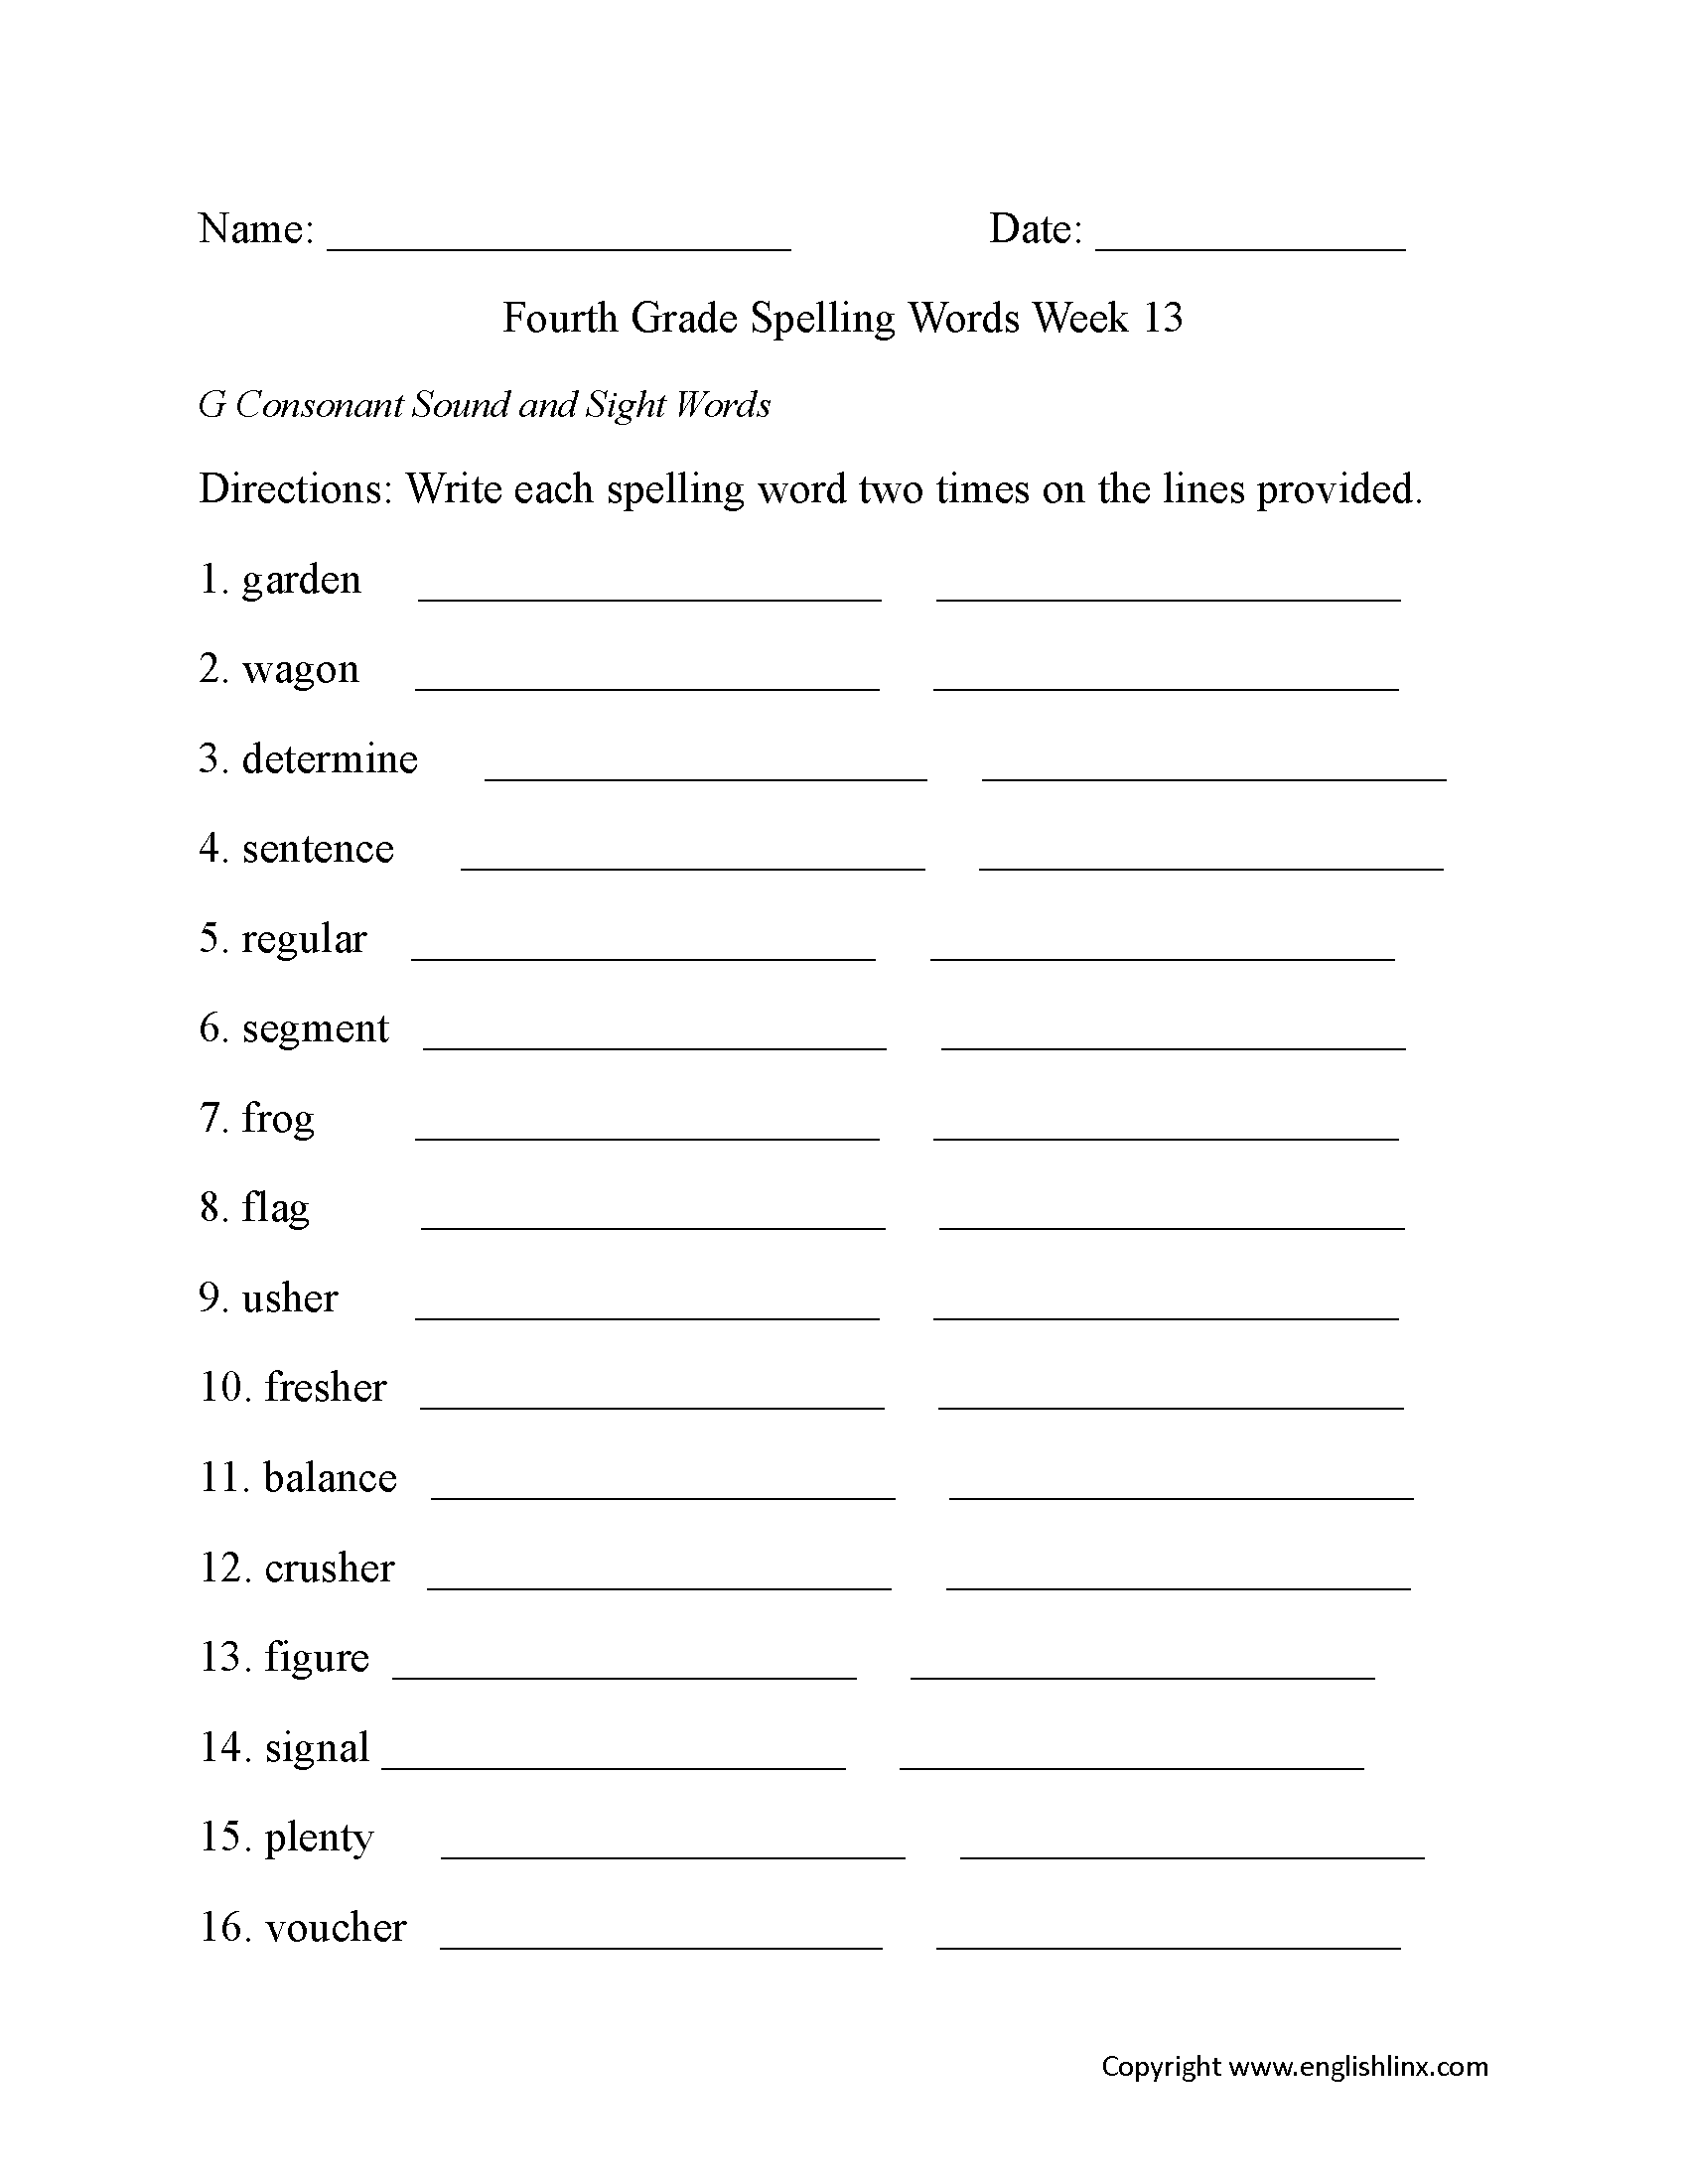 Spelling Worksheets | Fourth Grade Spelling Worksheets